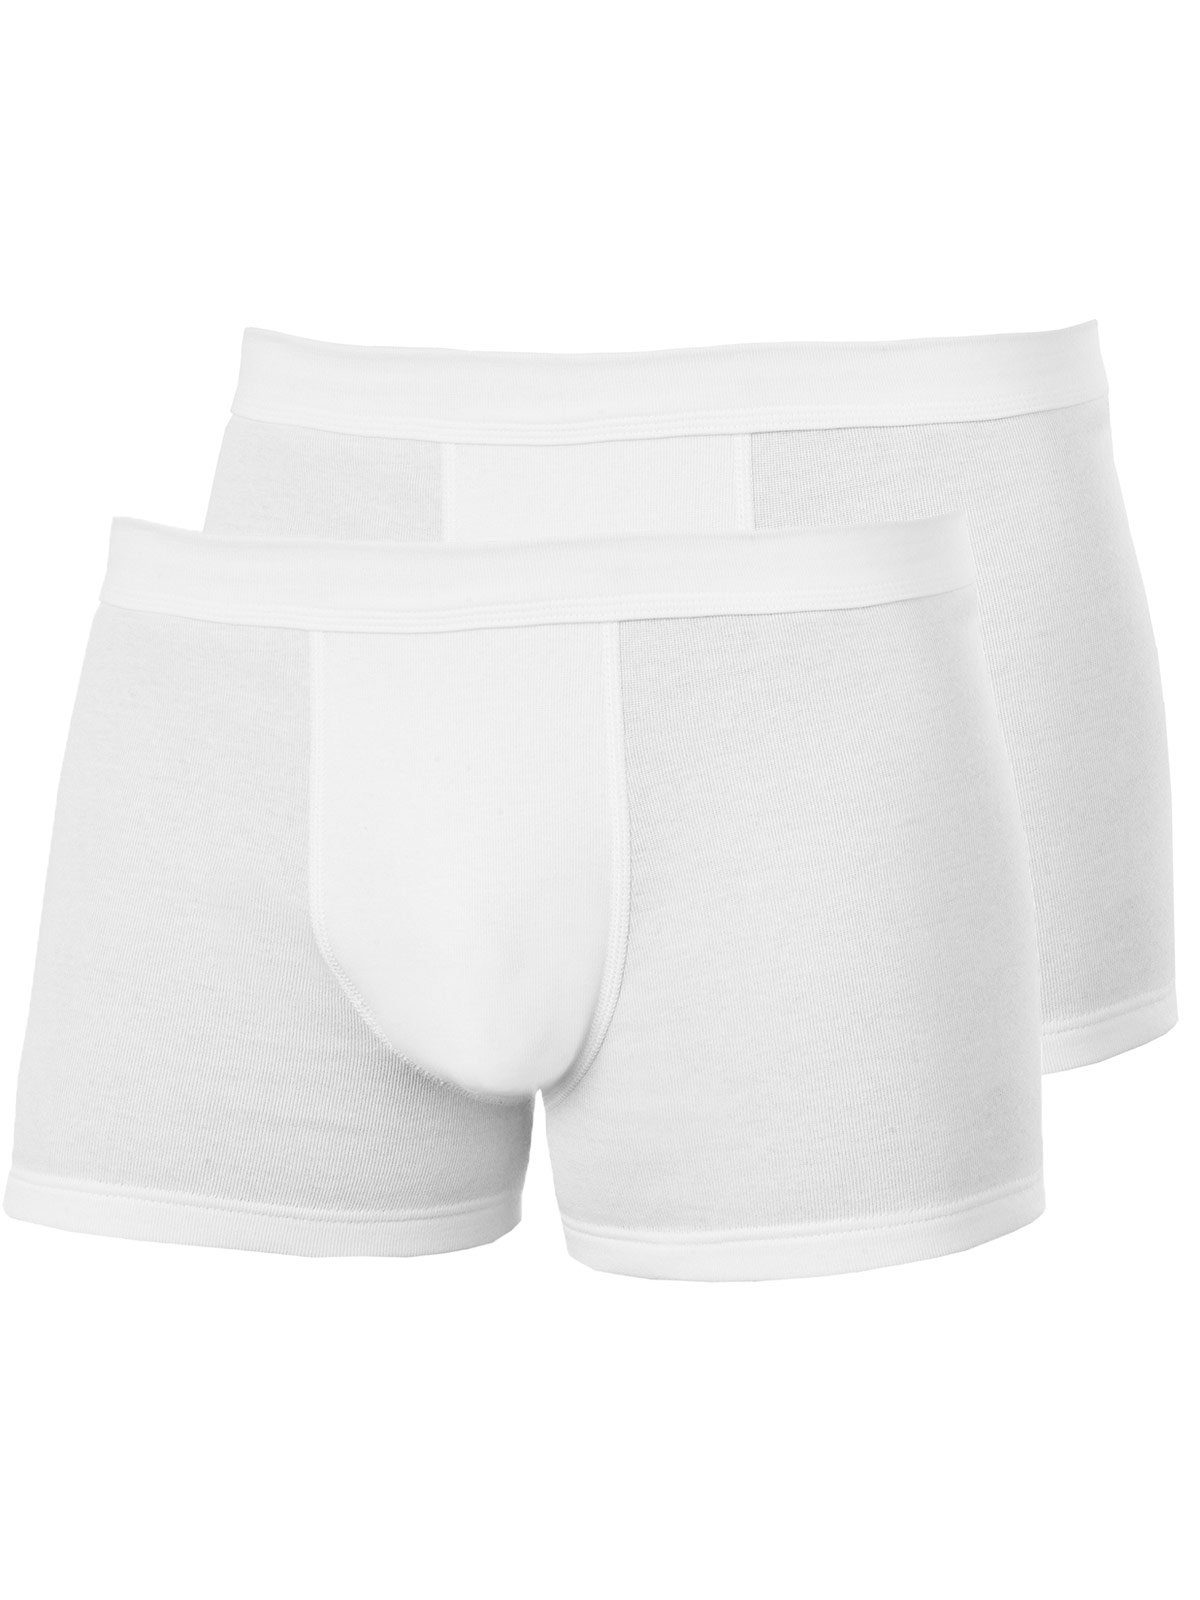 Cotton Retro Pants 8er Bio 8-St) (Spar-Set, weiss Sparpack - steingrau-melange Pants Herren KUMPF